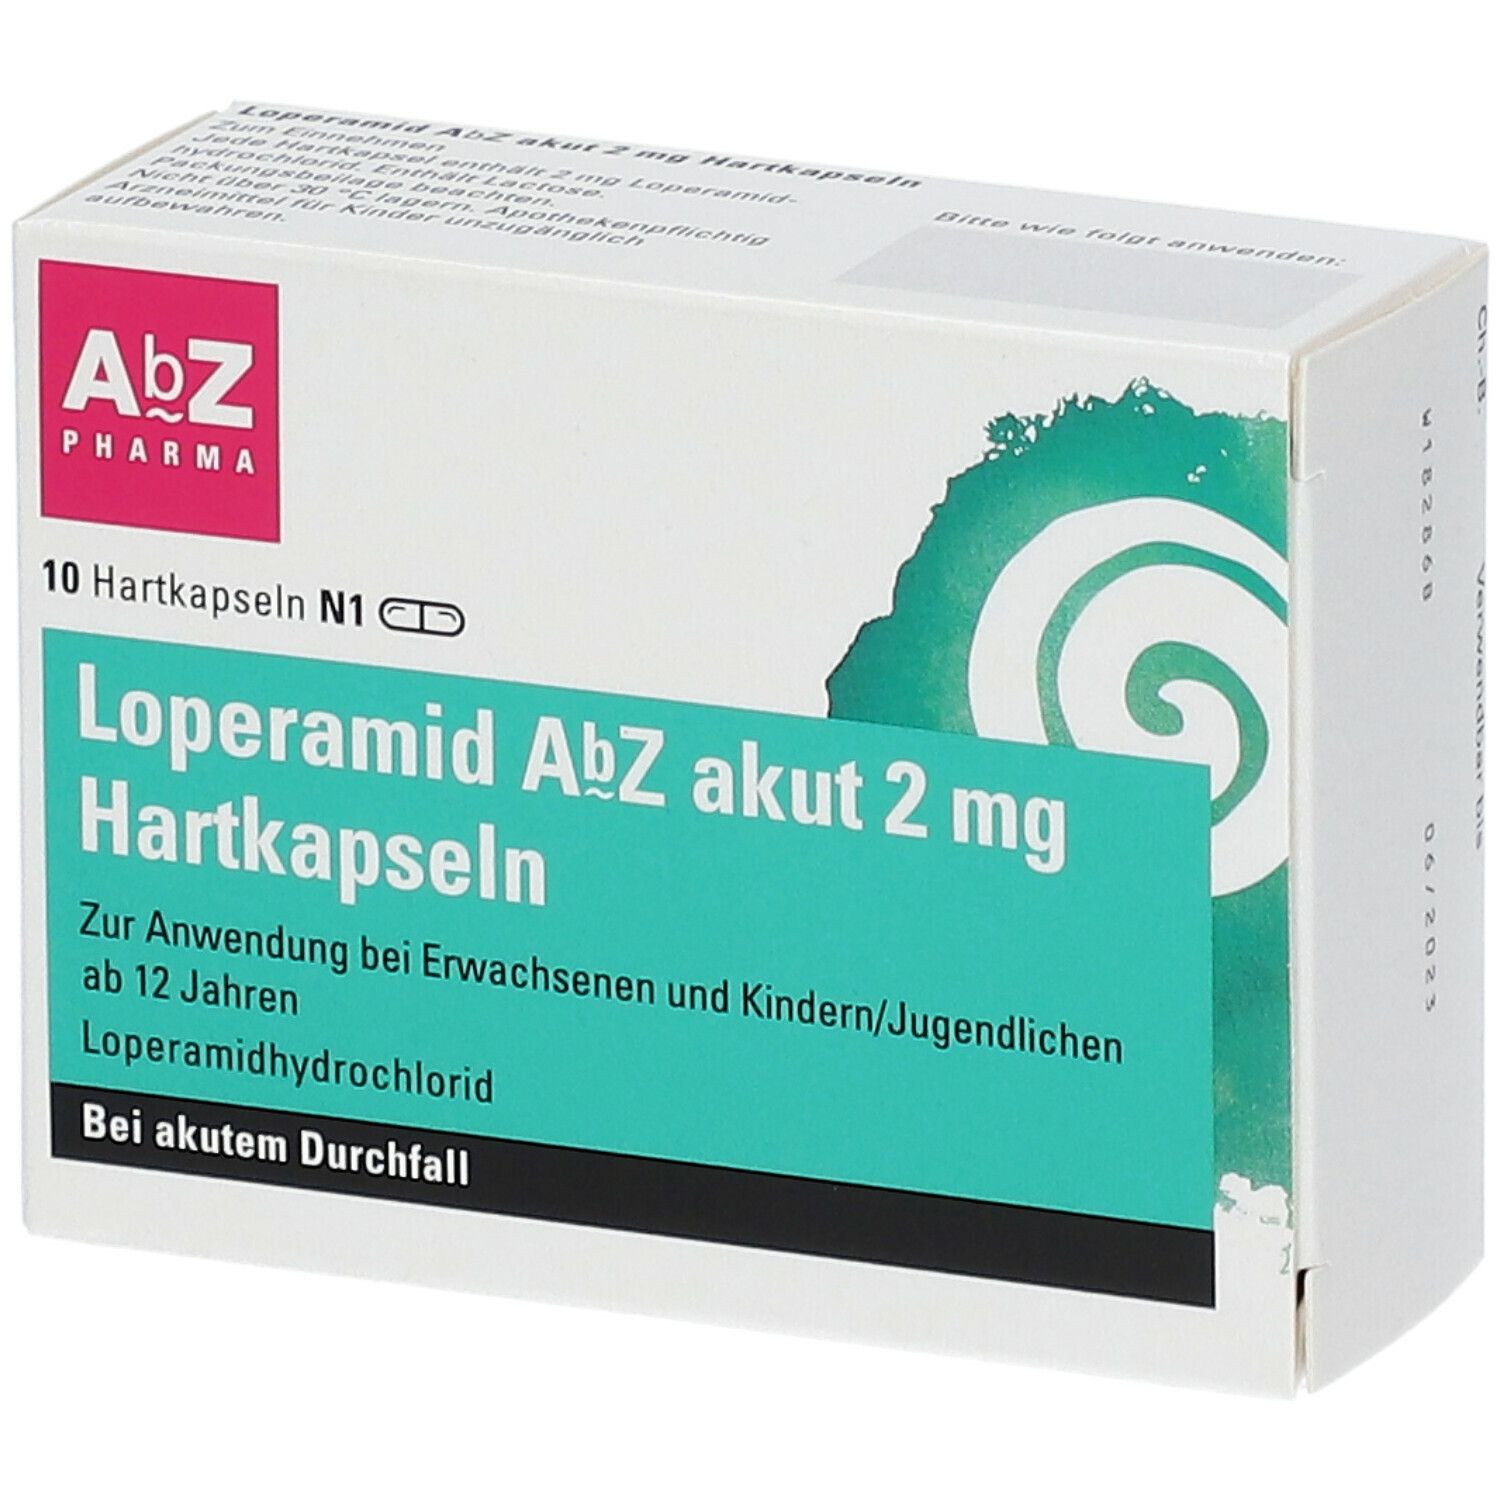 Loperamid AbZ akut 2 mg